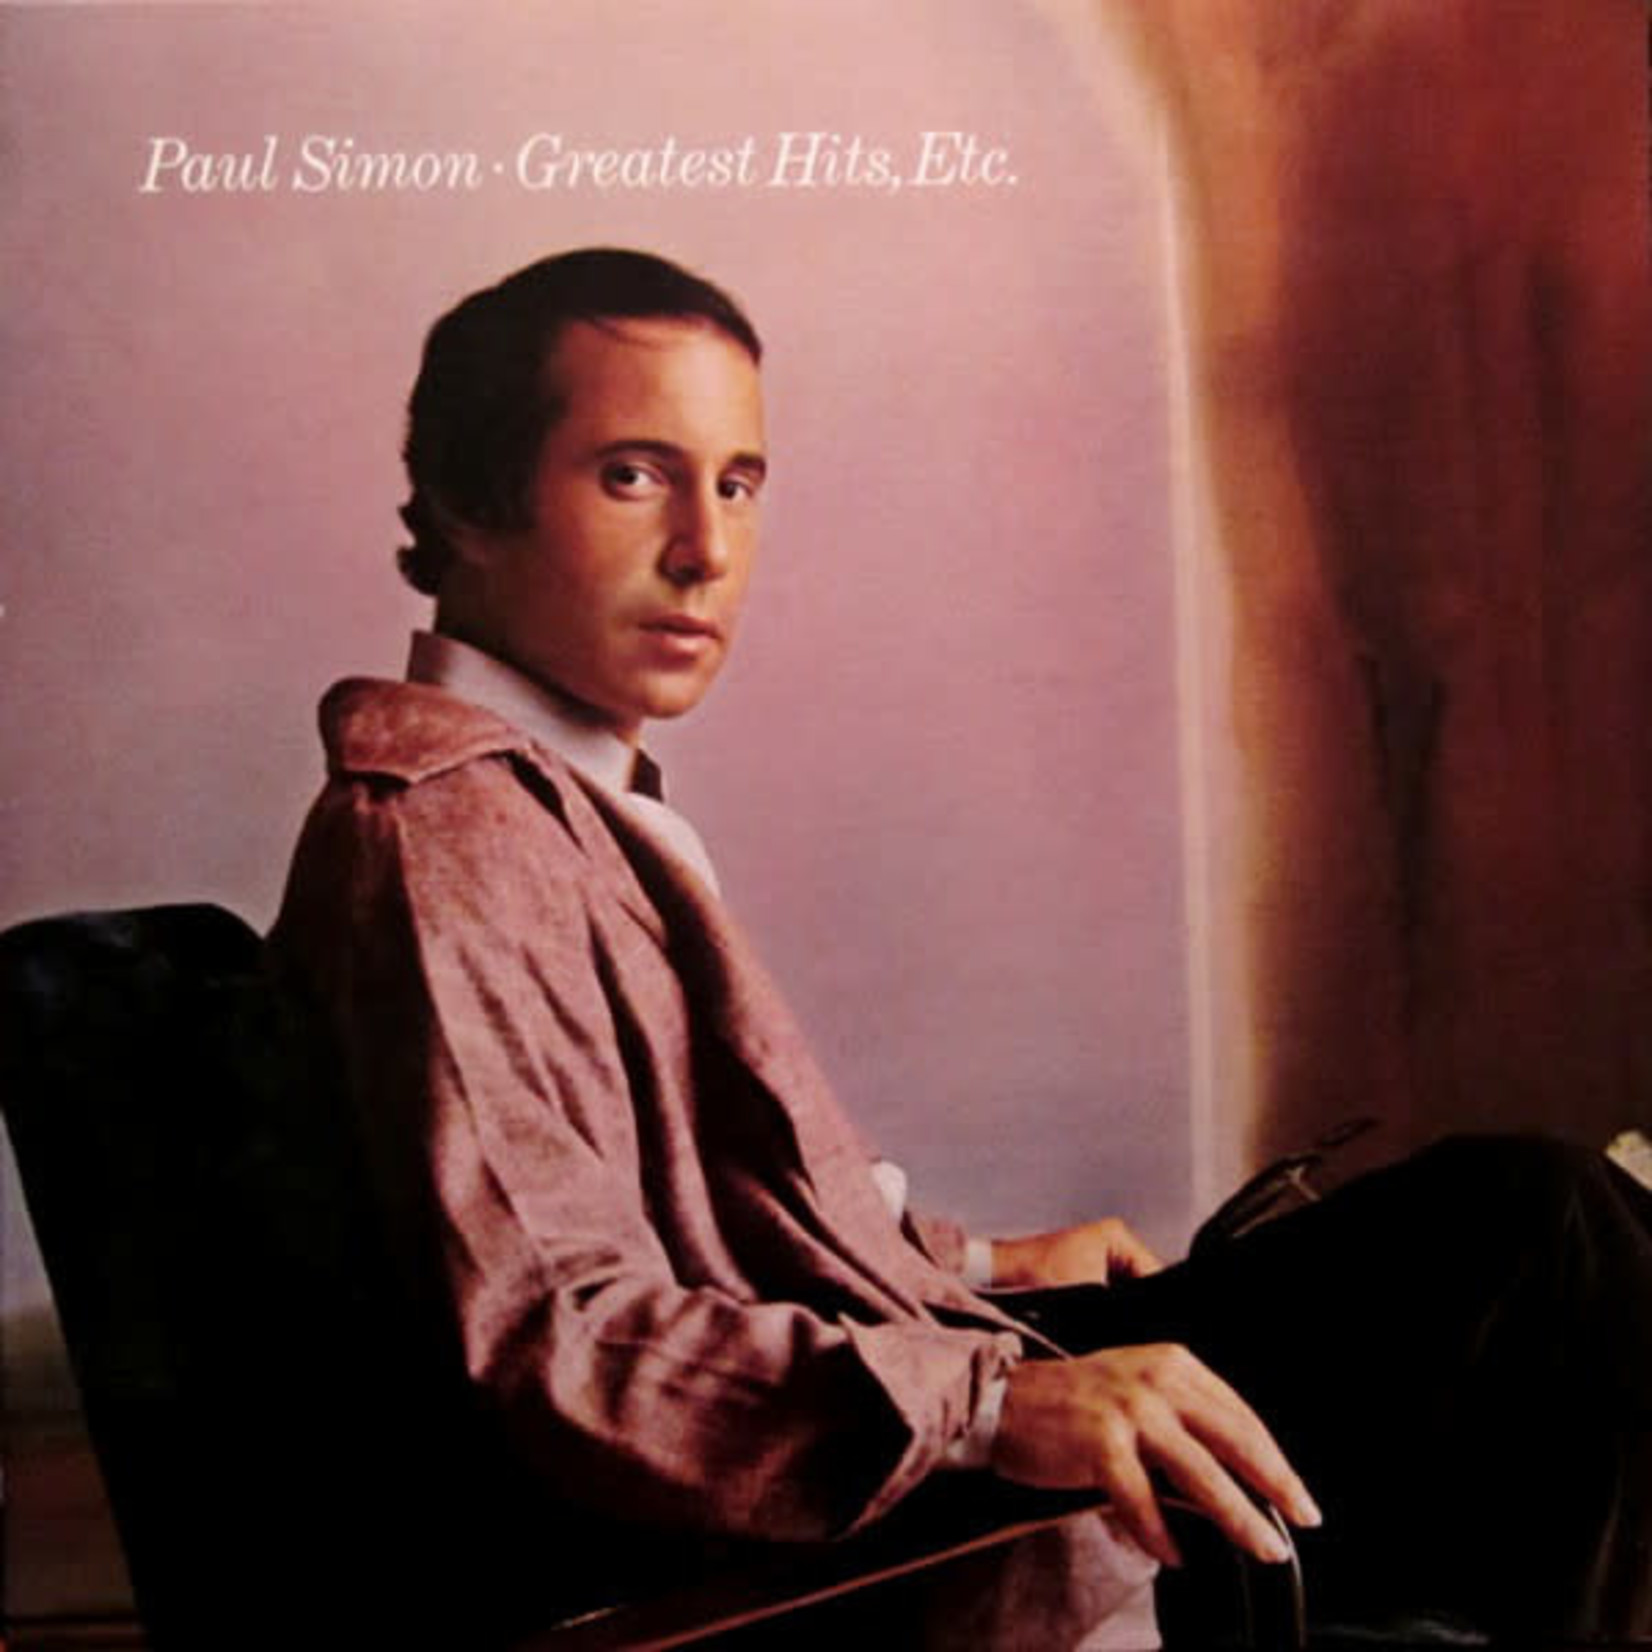 [Vintage] Paul Simon - Greatest Hits Etc